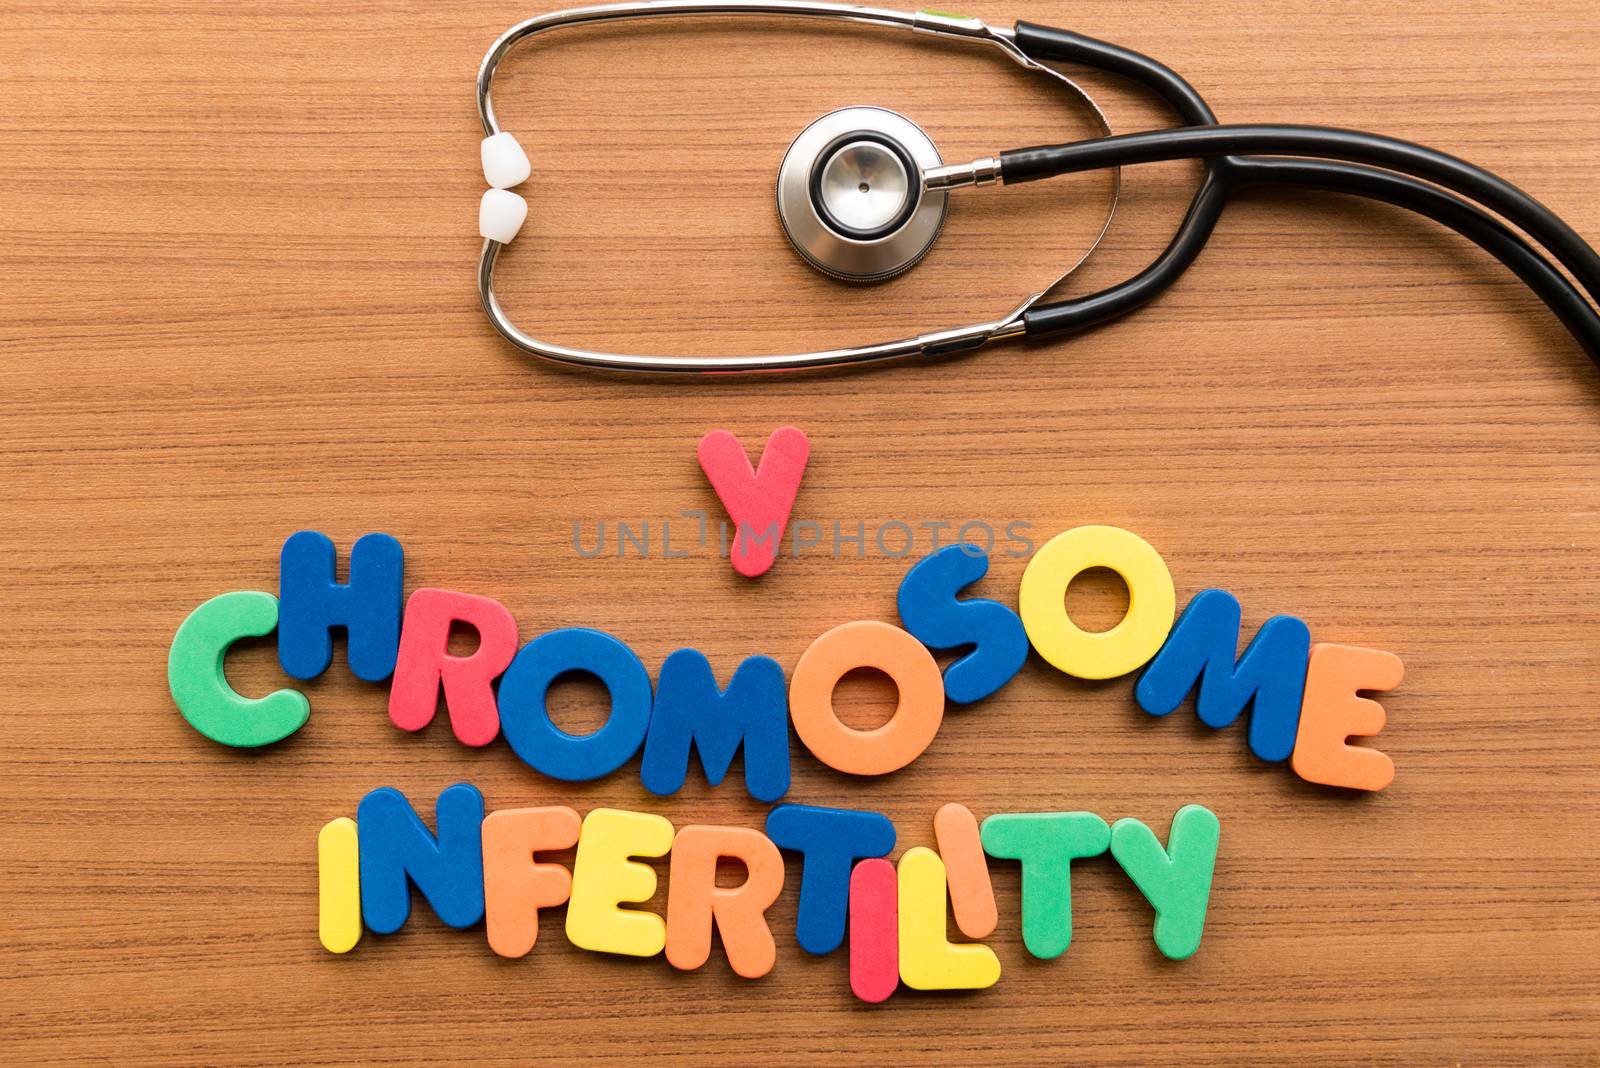 Y chromosome infertility colorful word with stethoscope by sohel.parvez@hotmail.com